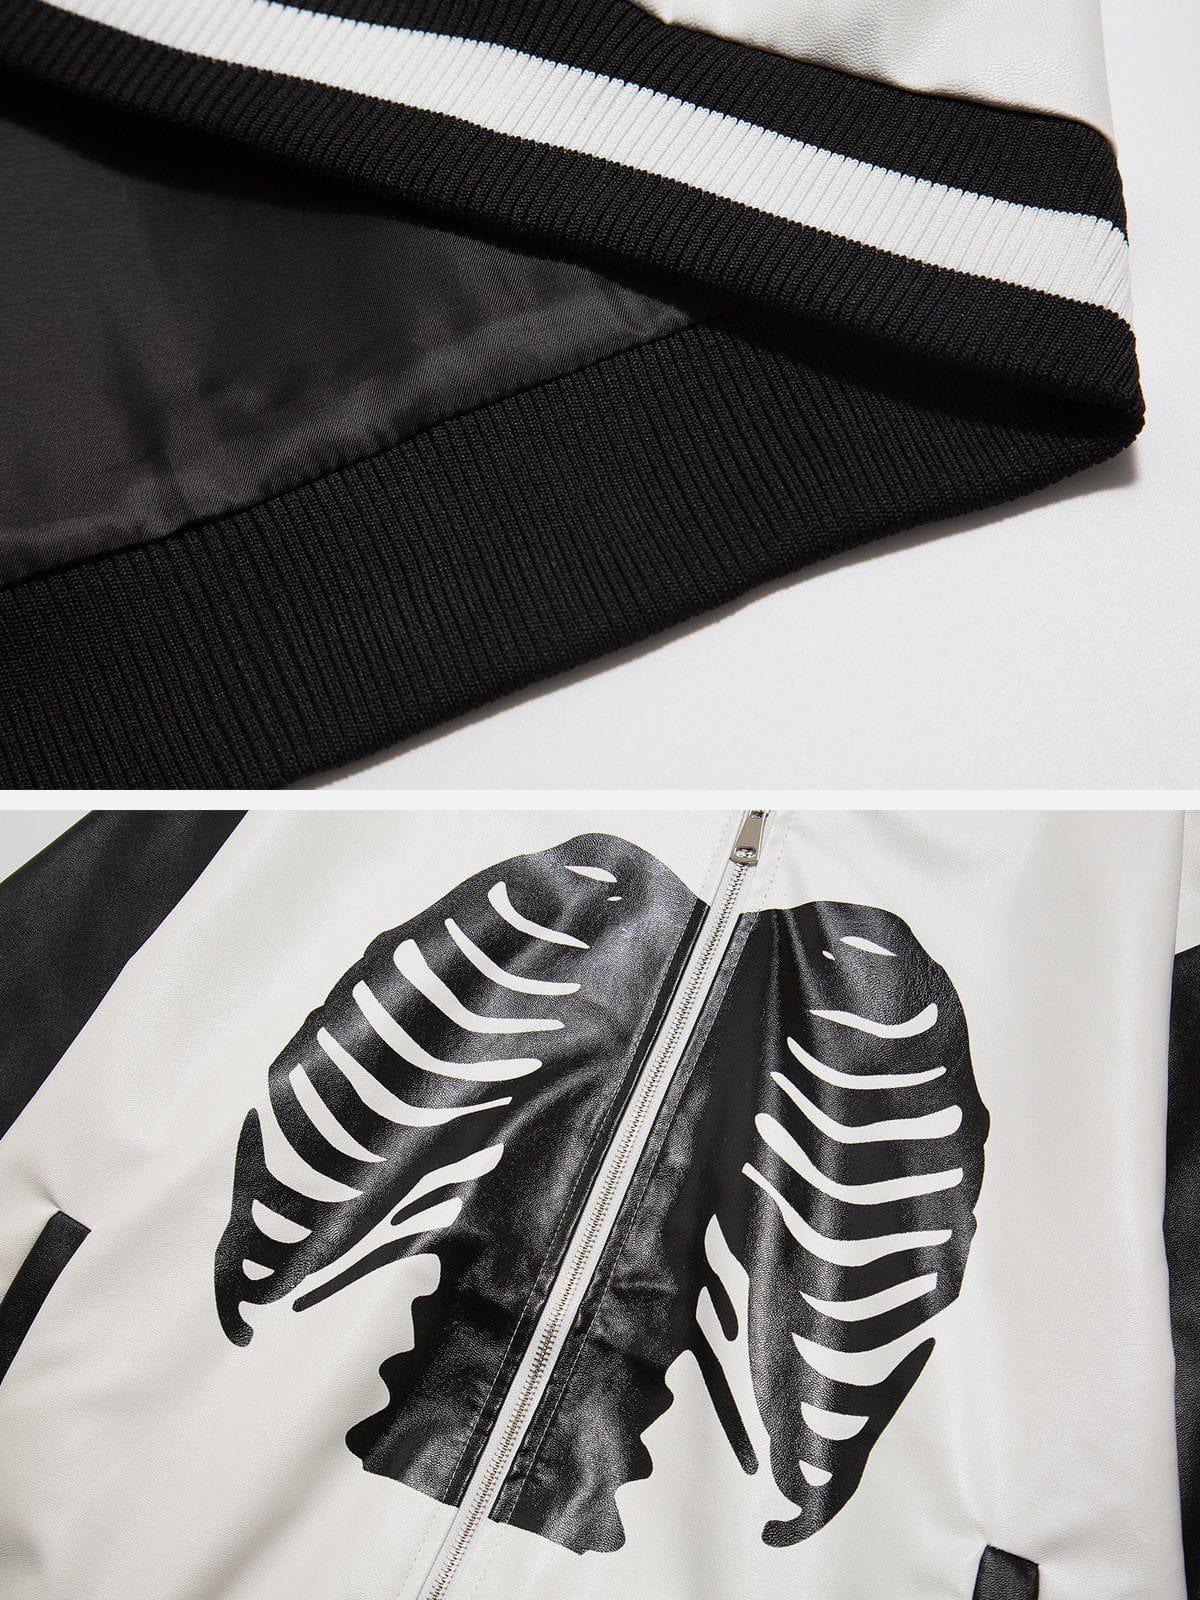 LUXENFY™ - Skeleton Zip Up Varsity Jacket luxenfy.com